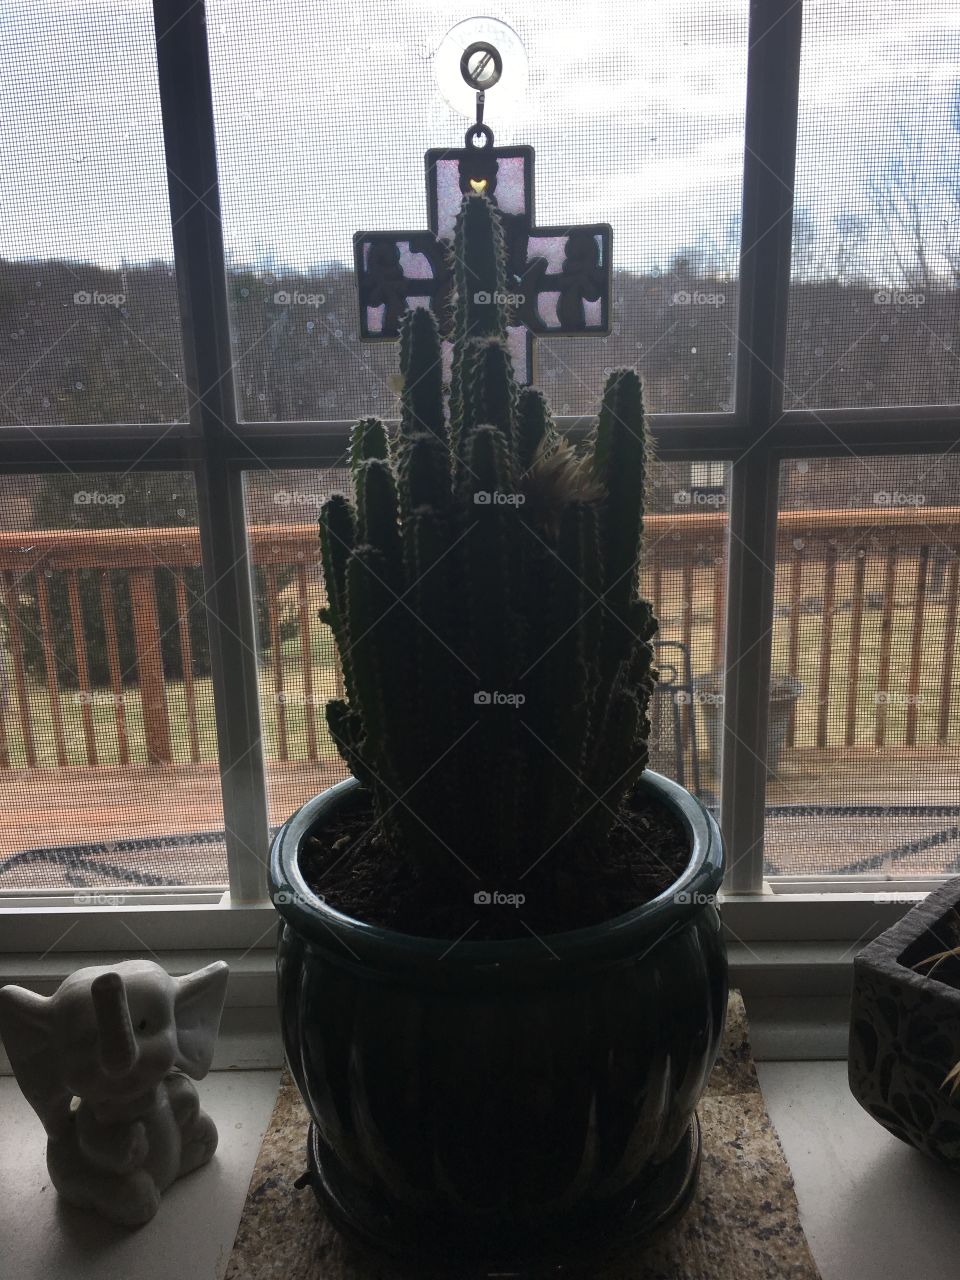 Cactus in the window 